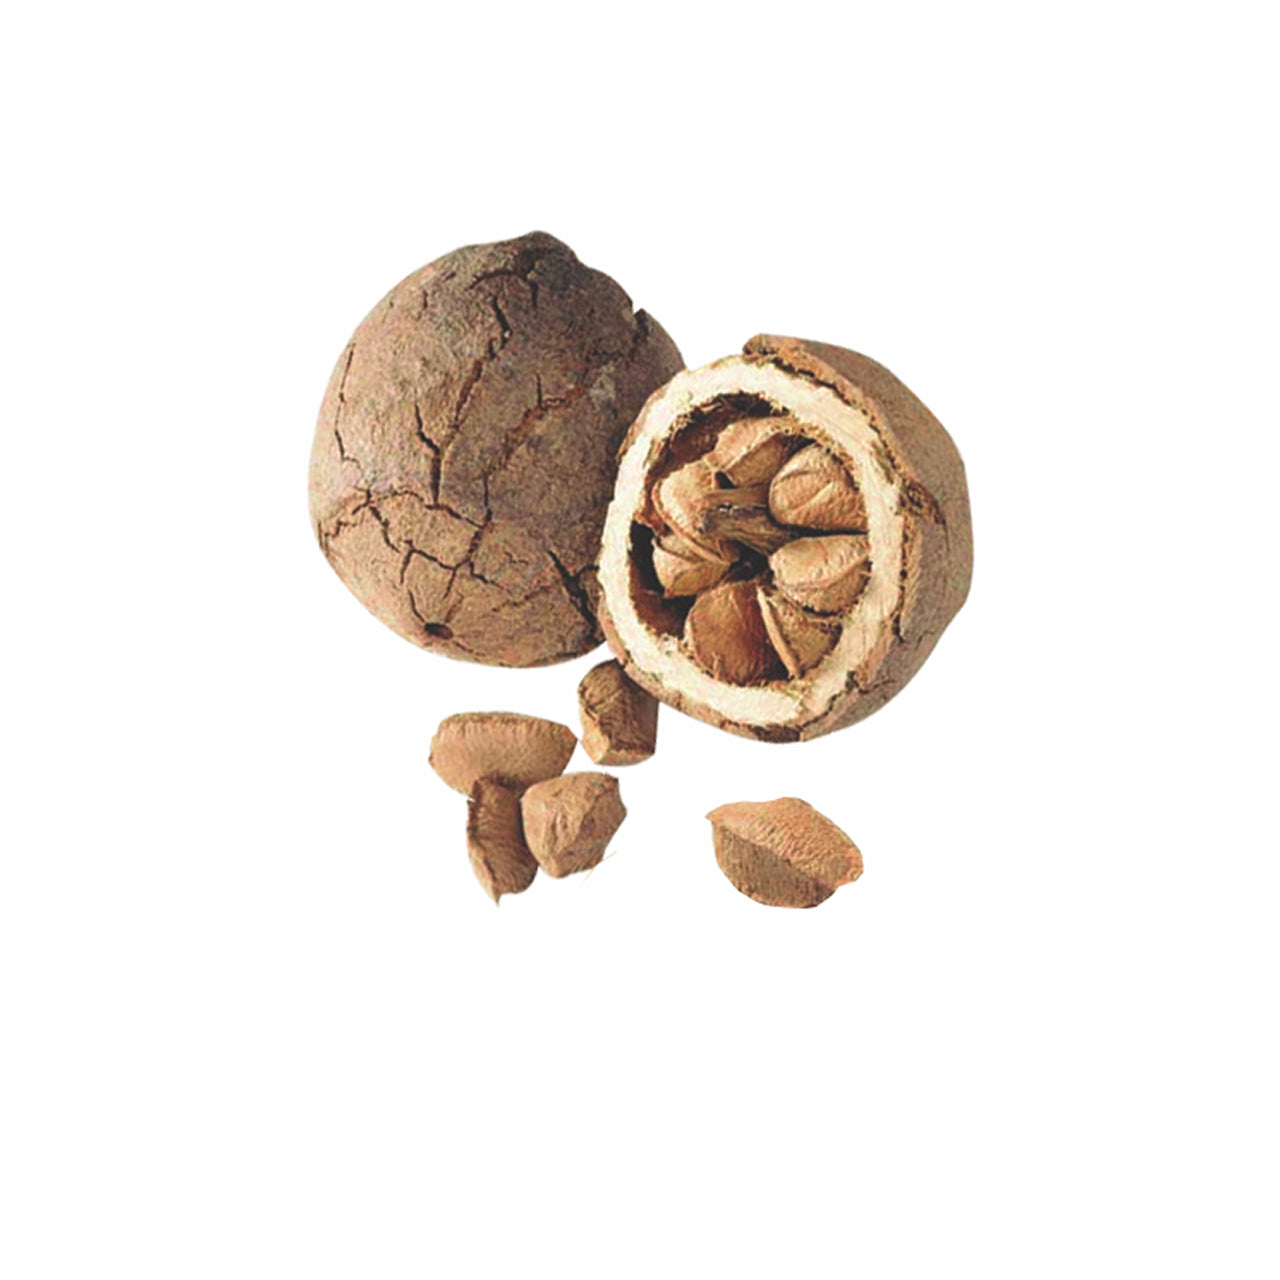 Brazil Nut Oil Organic